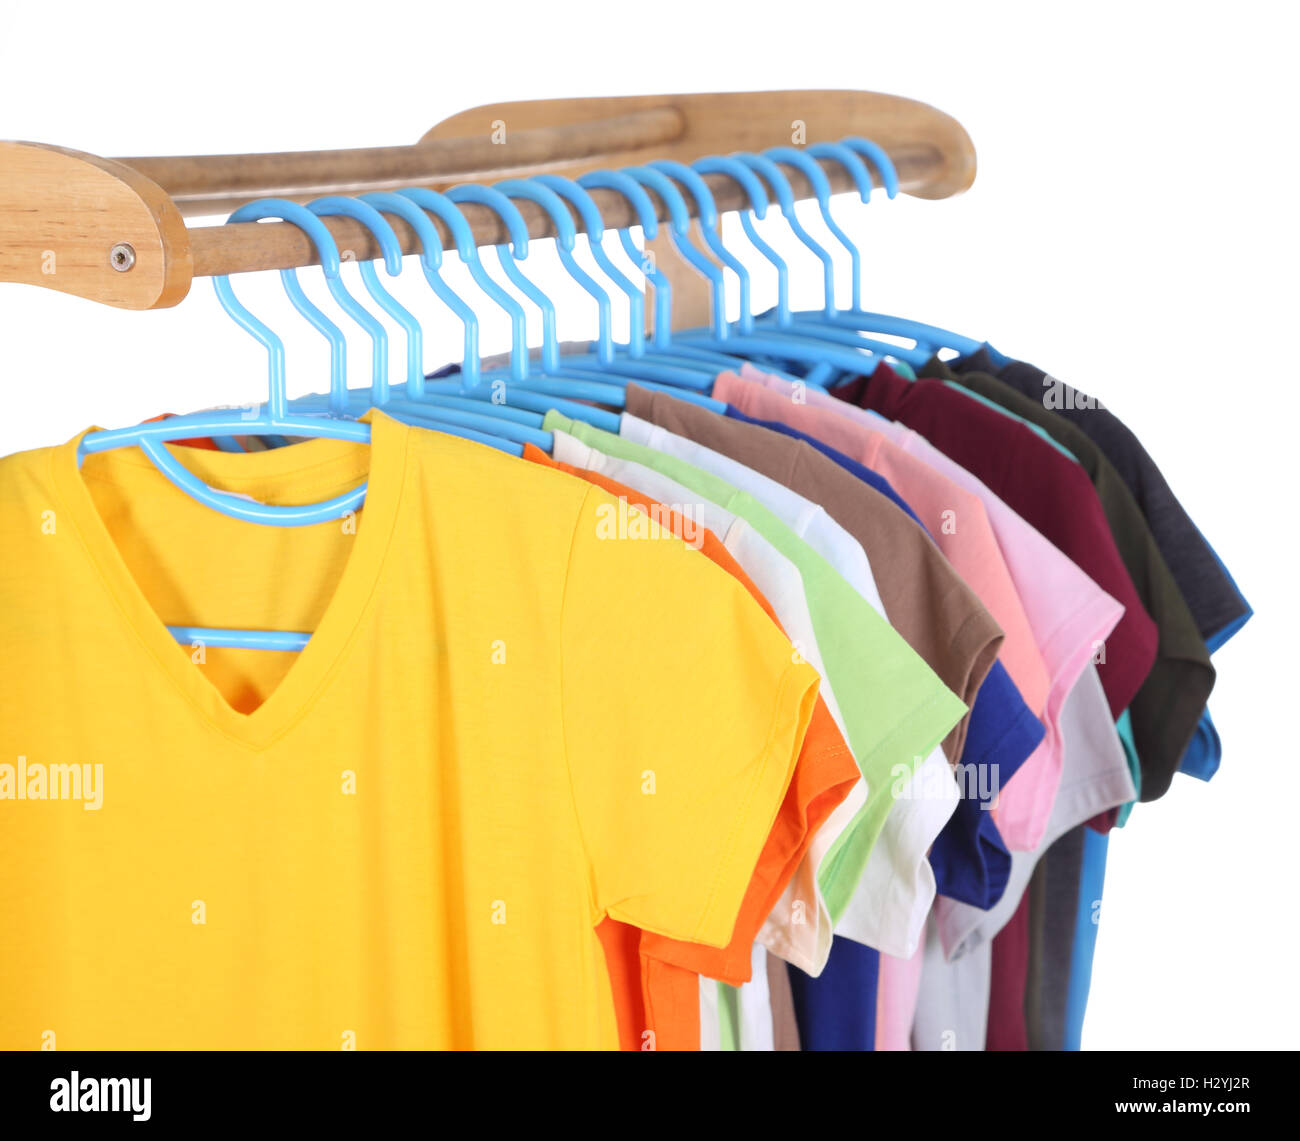 t-shirts hanging on hangers Stock Photo - Alamy